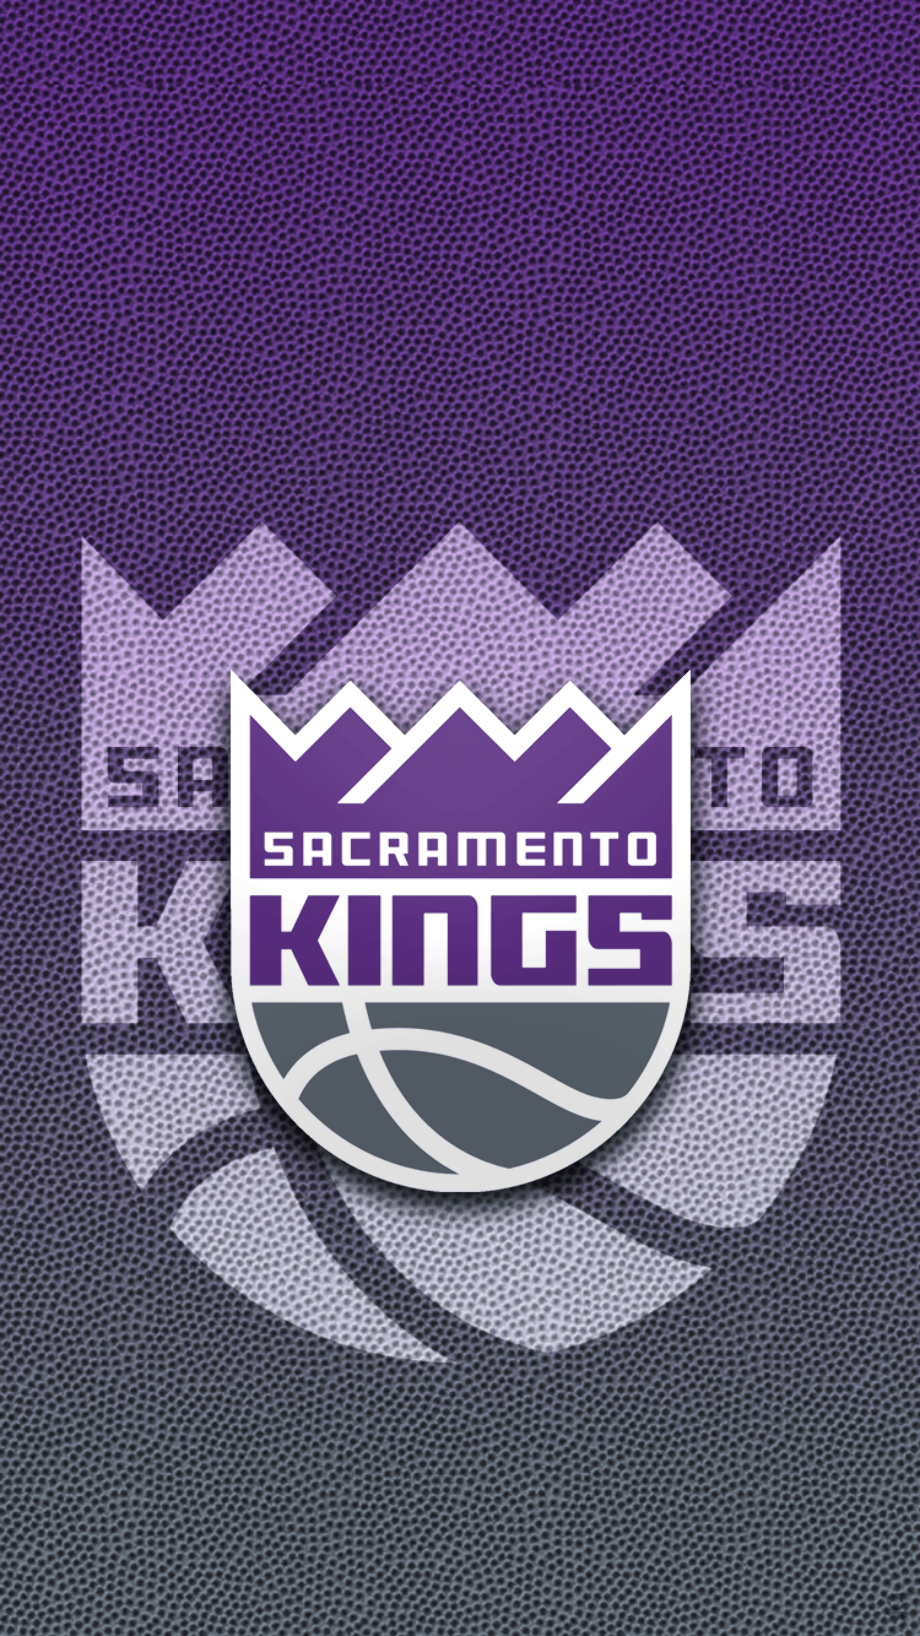 sacramento kings logo iphone